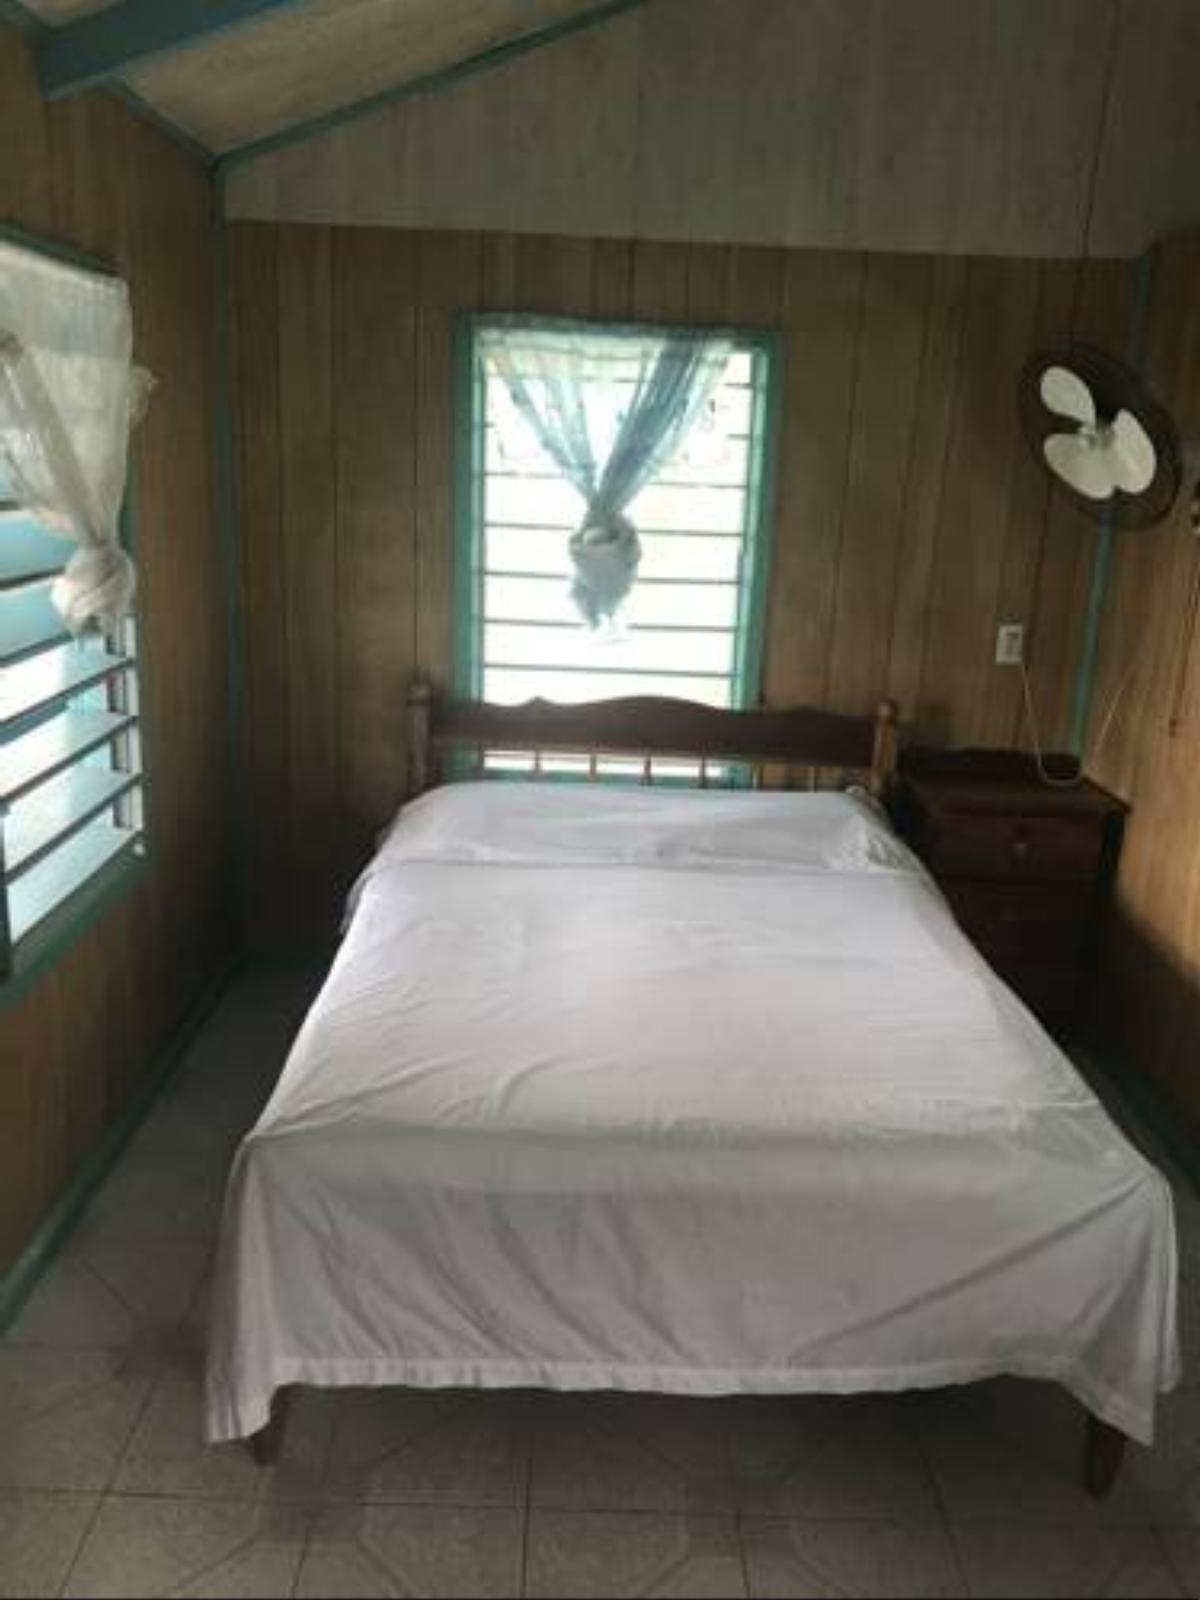 Lorraine's Guest House Hotel Caye Caulker Belize